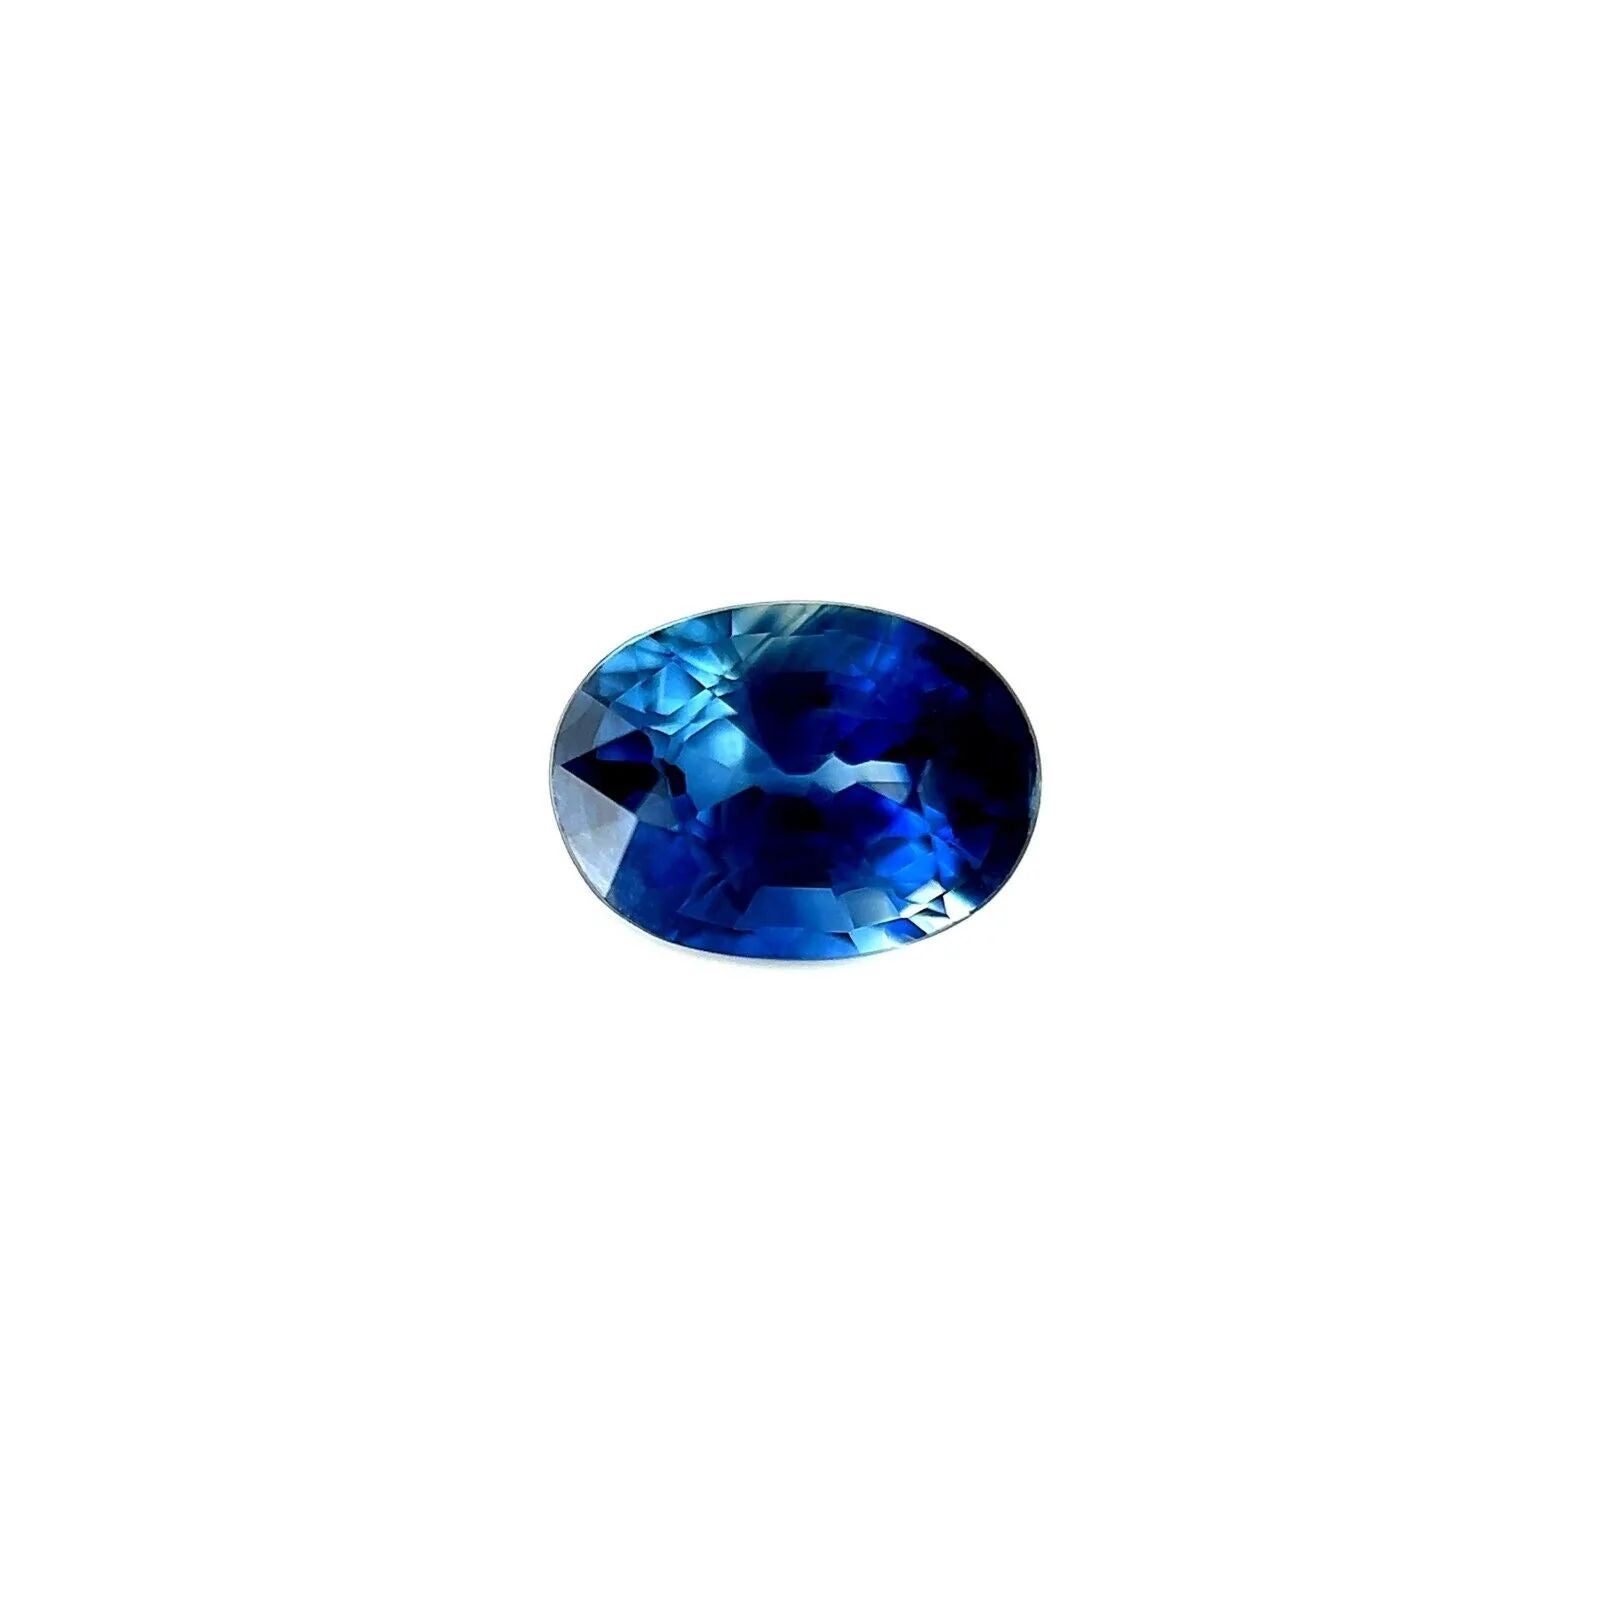 Fine 1.05ct Vivid Blue Oval Cut Sapphire Rare Thai Gemstone VVS For Sale